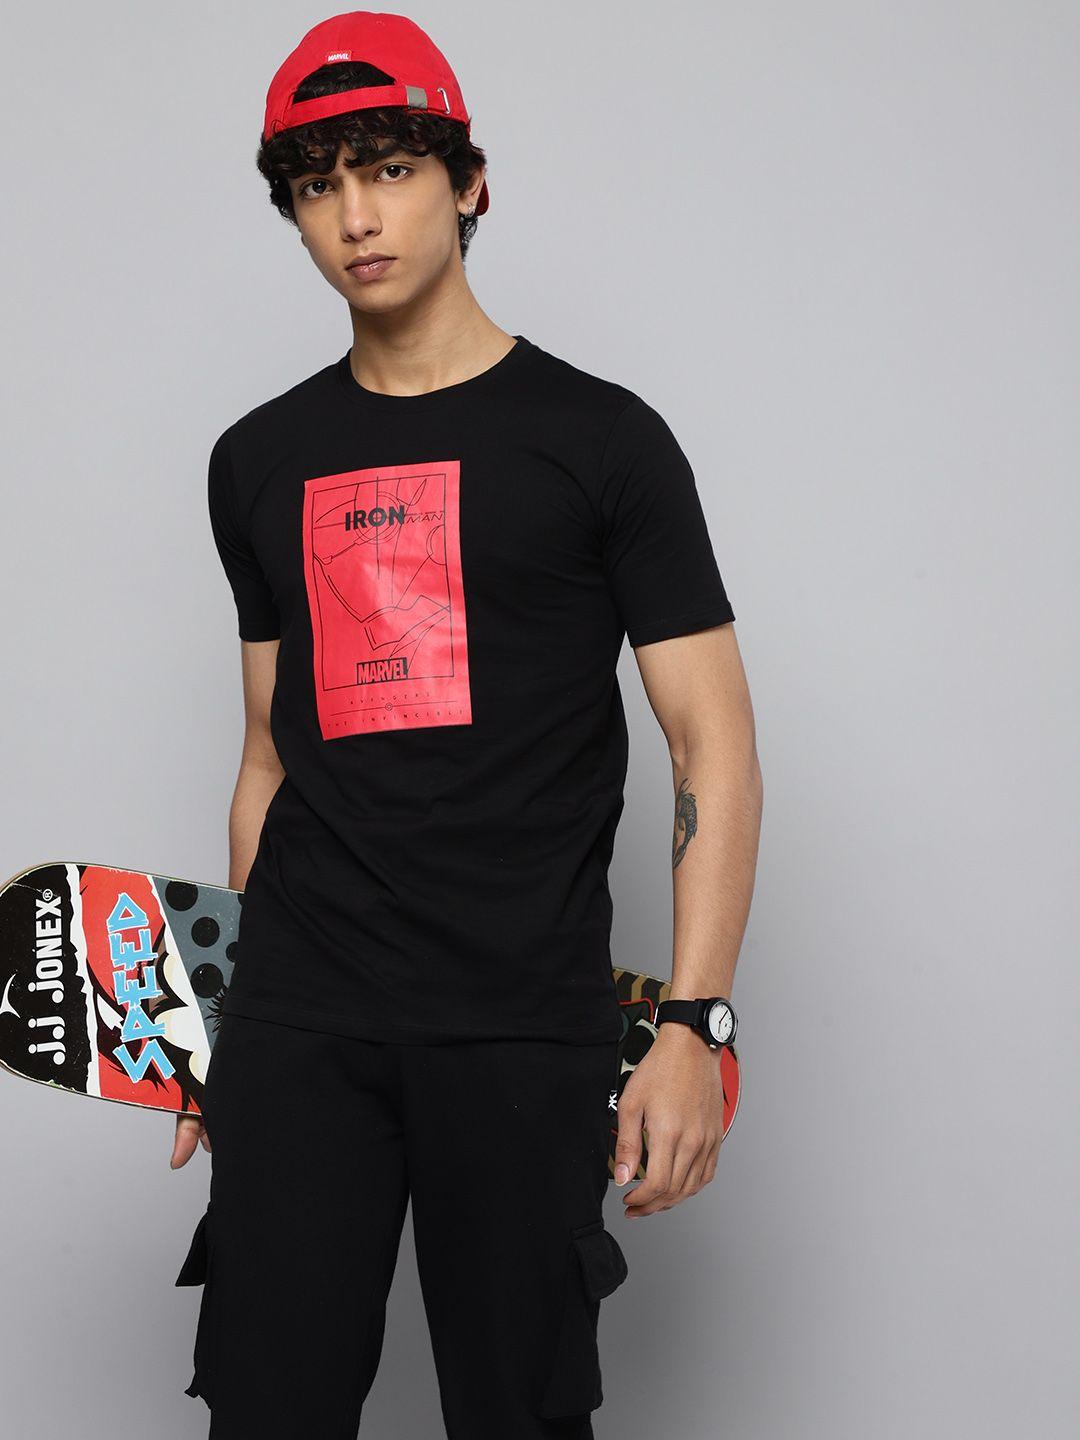 kook n keech marvel teens boys black & red iron man printed pure cotton t-shirt